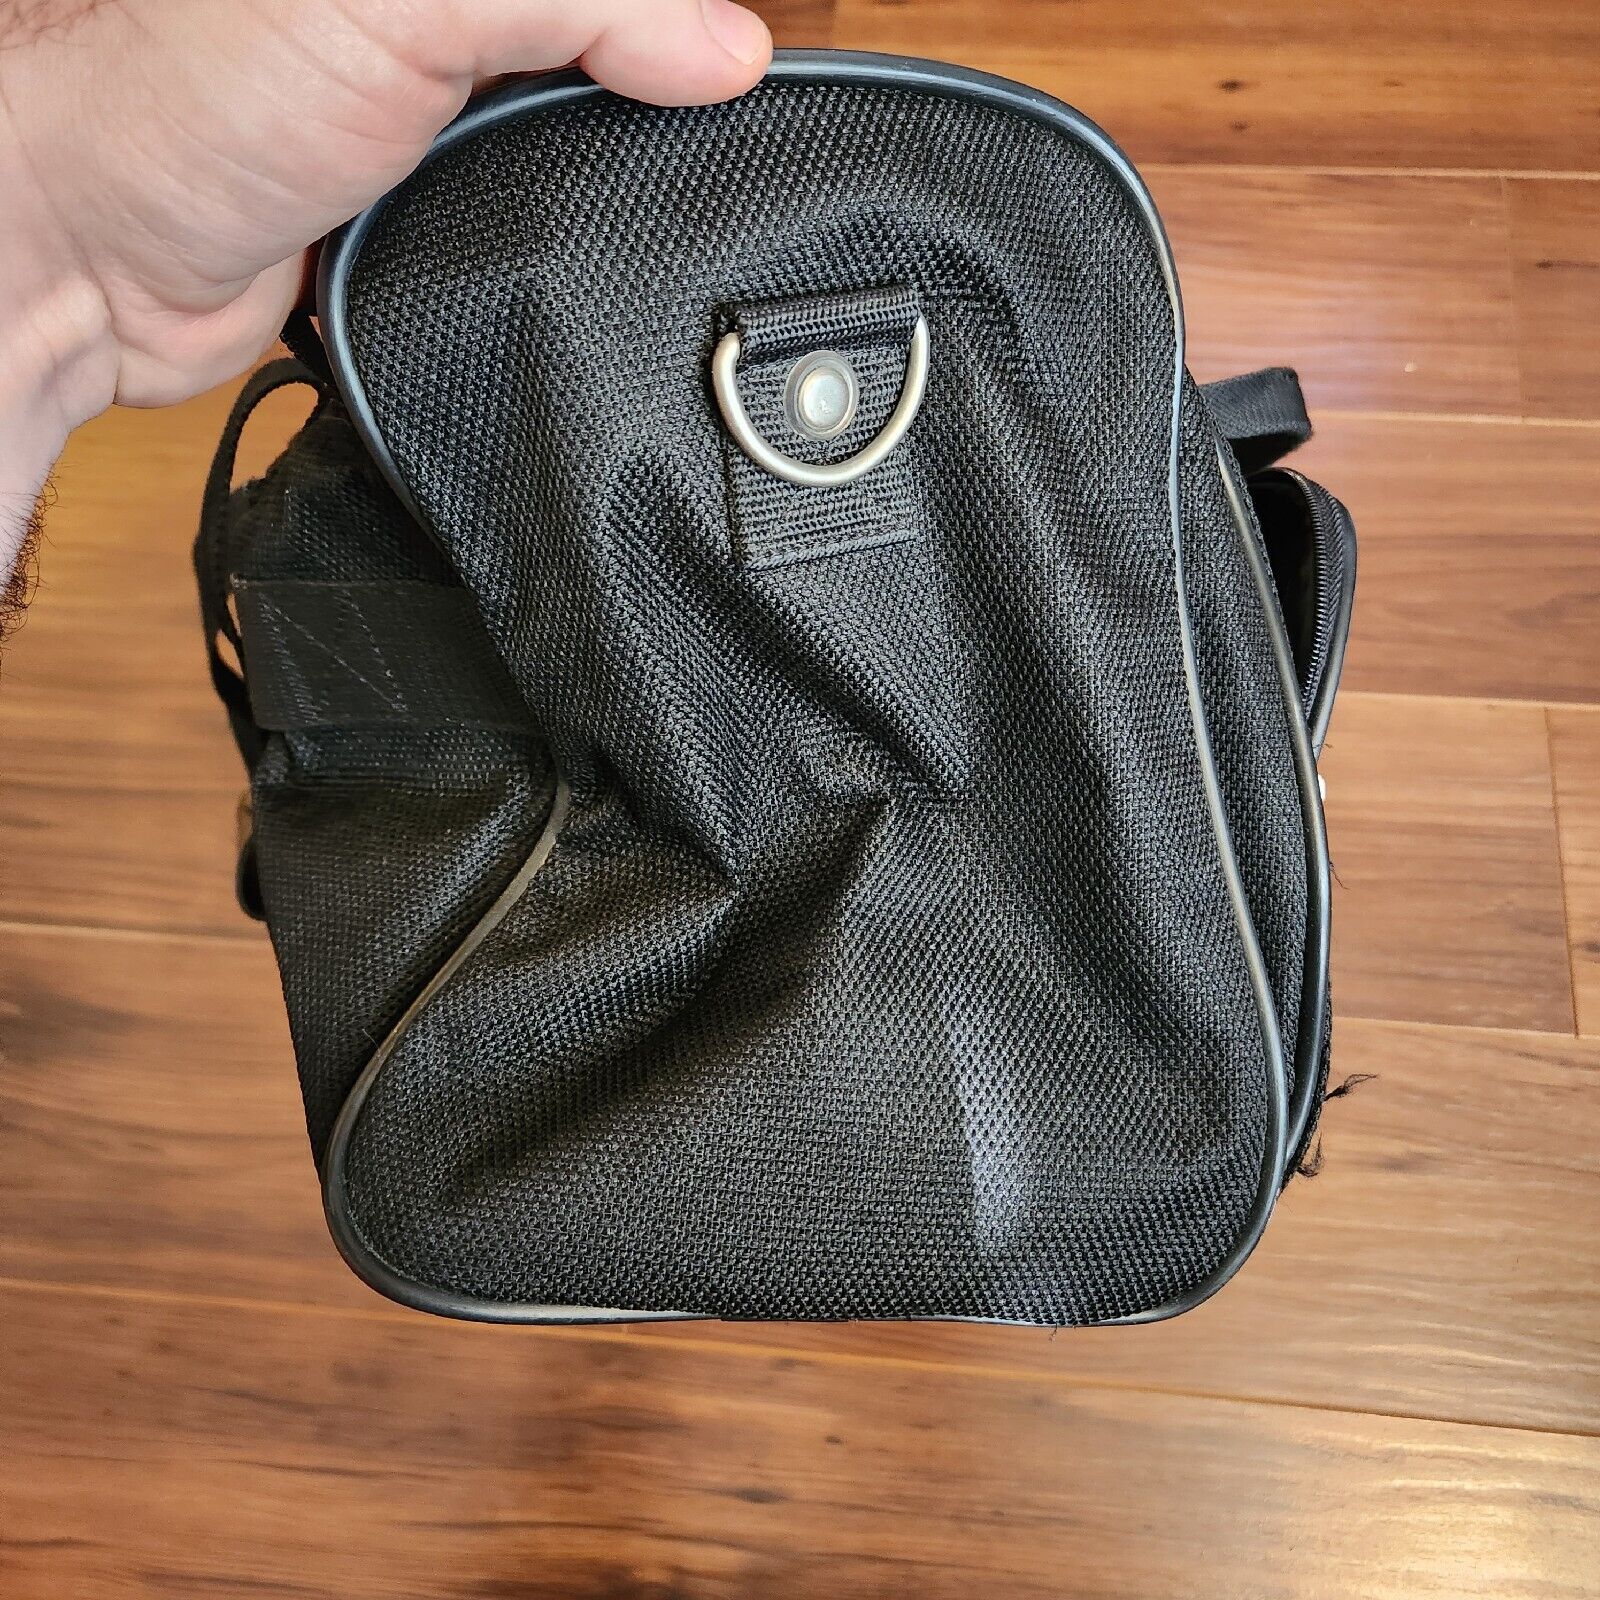 Samsonite Black Nylon Travel Tote Duffle Bag 16” Carry-on Gym Overnight 